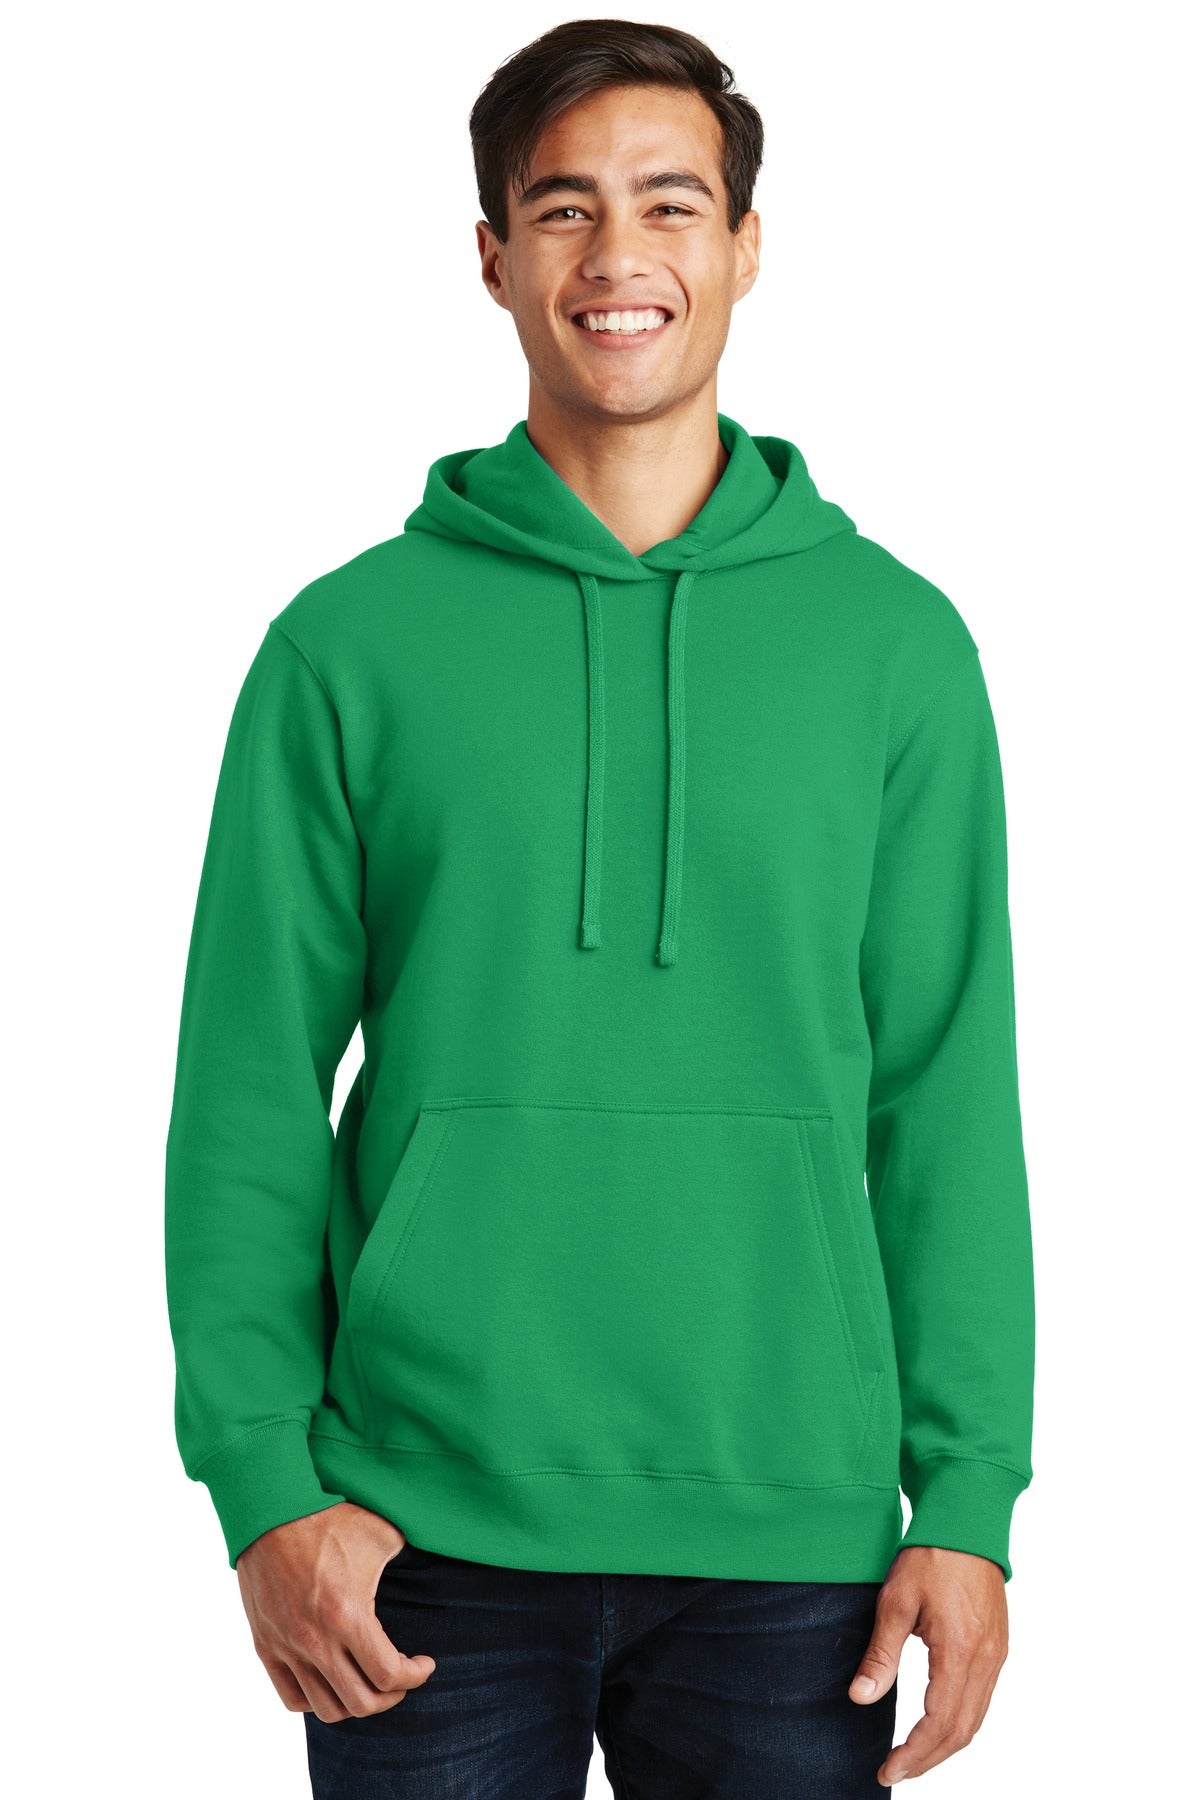 Photo of Port & Company Sweatshirts/Fleece PC850H  color  Athletic Kelly